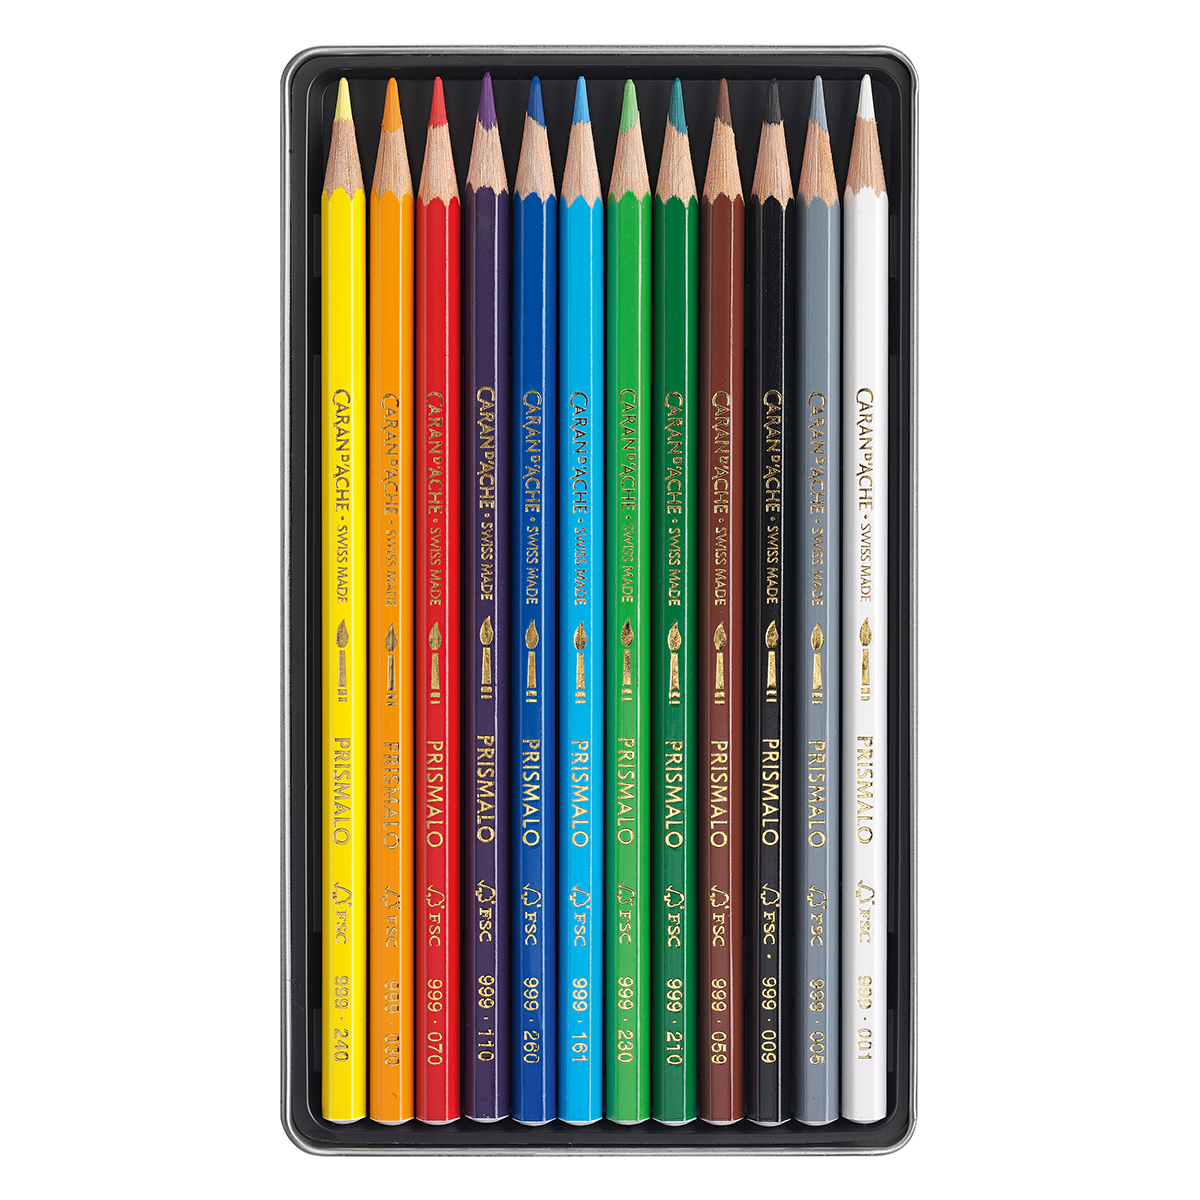 Prismalo Watercolor Pencils 12-set in the group Pens / Artist Pens / Watercolor Pencils at Pen Store (128888)